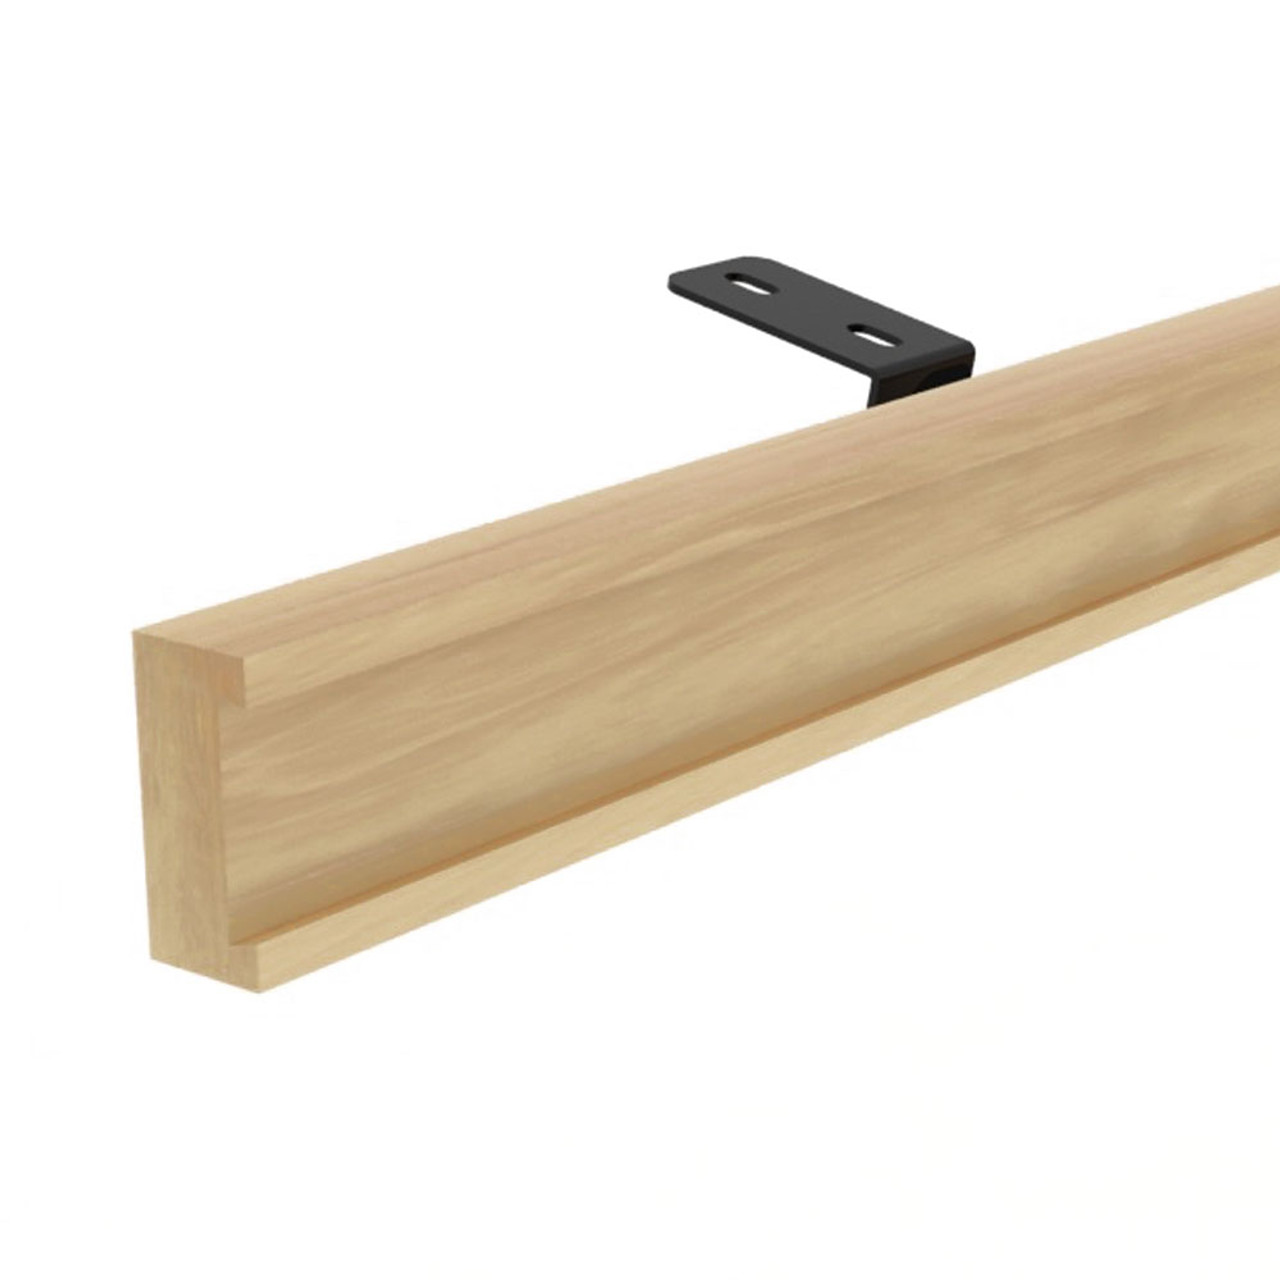 5-Pack Wooden Price Tag Holder Strip for Gondola Shelves